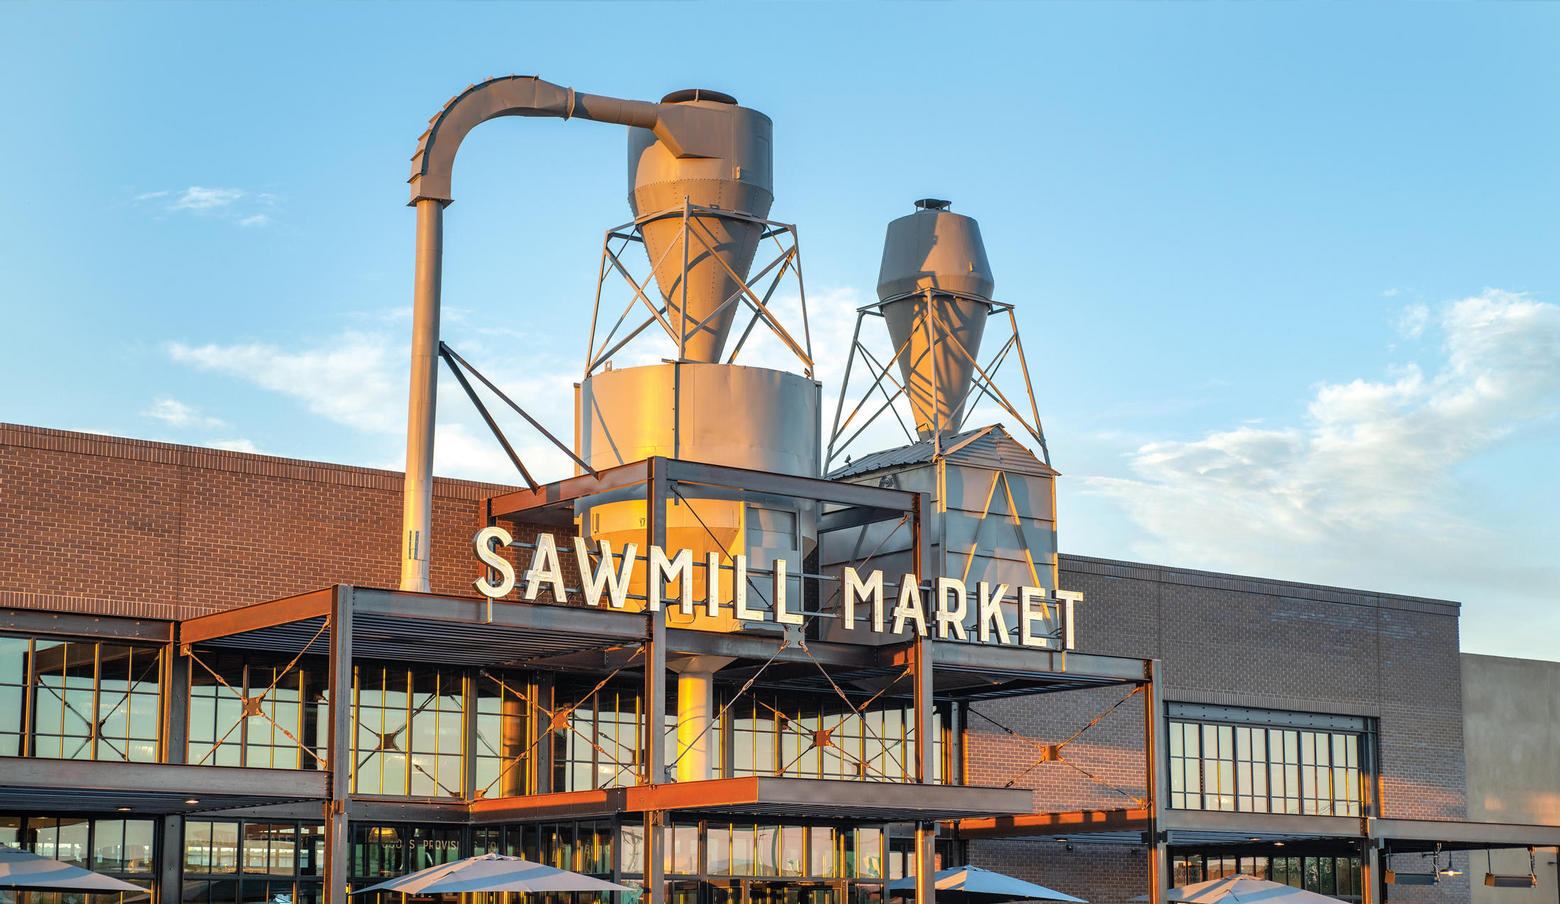 Sawmill Market entrance